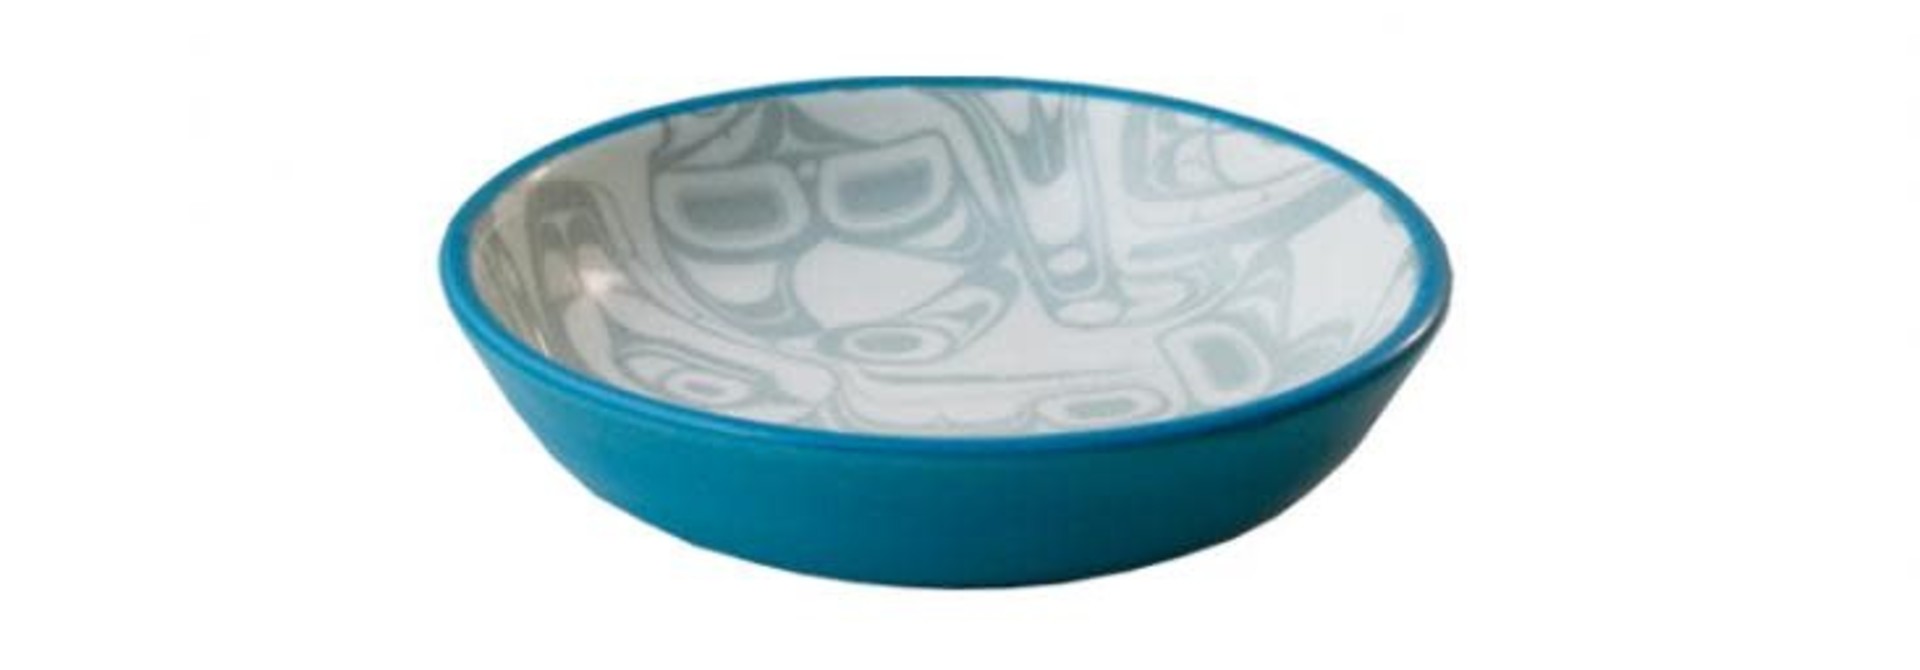 KR Ceramic Orca Small Dish Turquoise/Grey Kelly Robinson